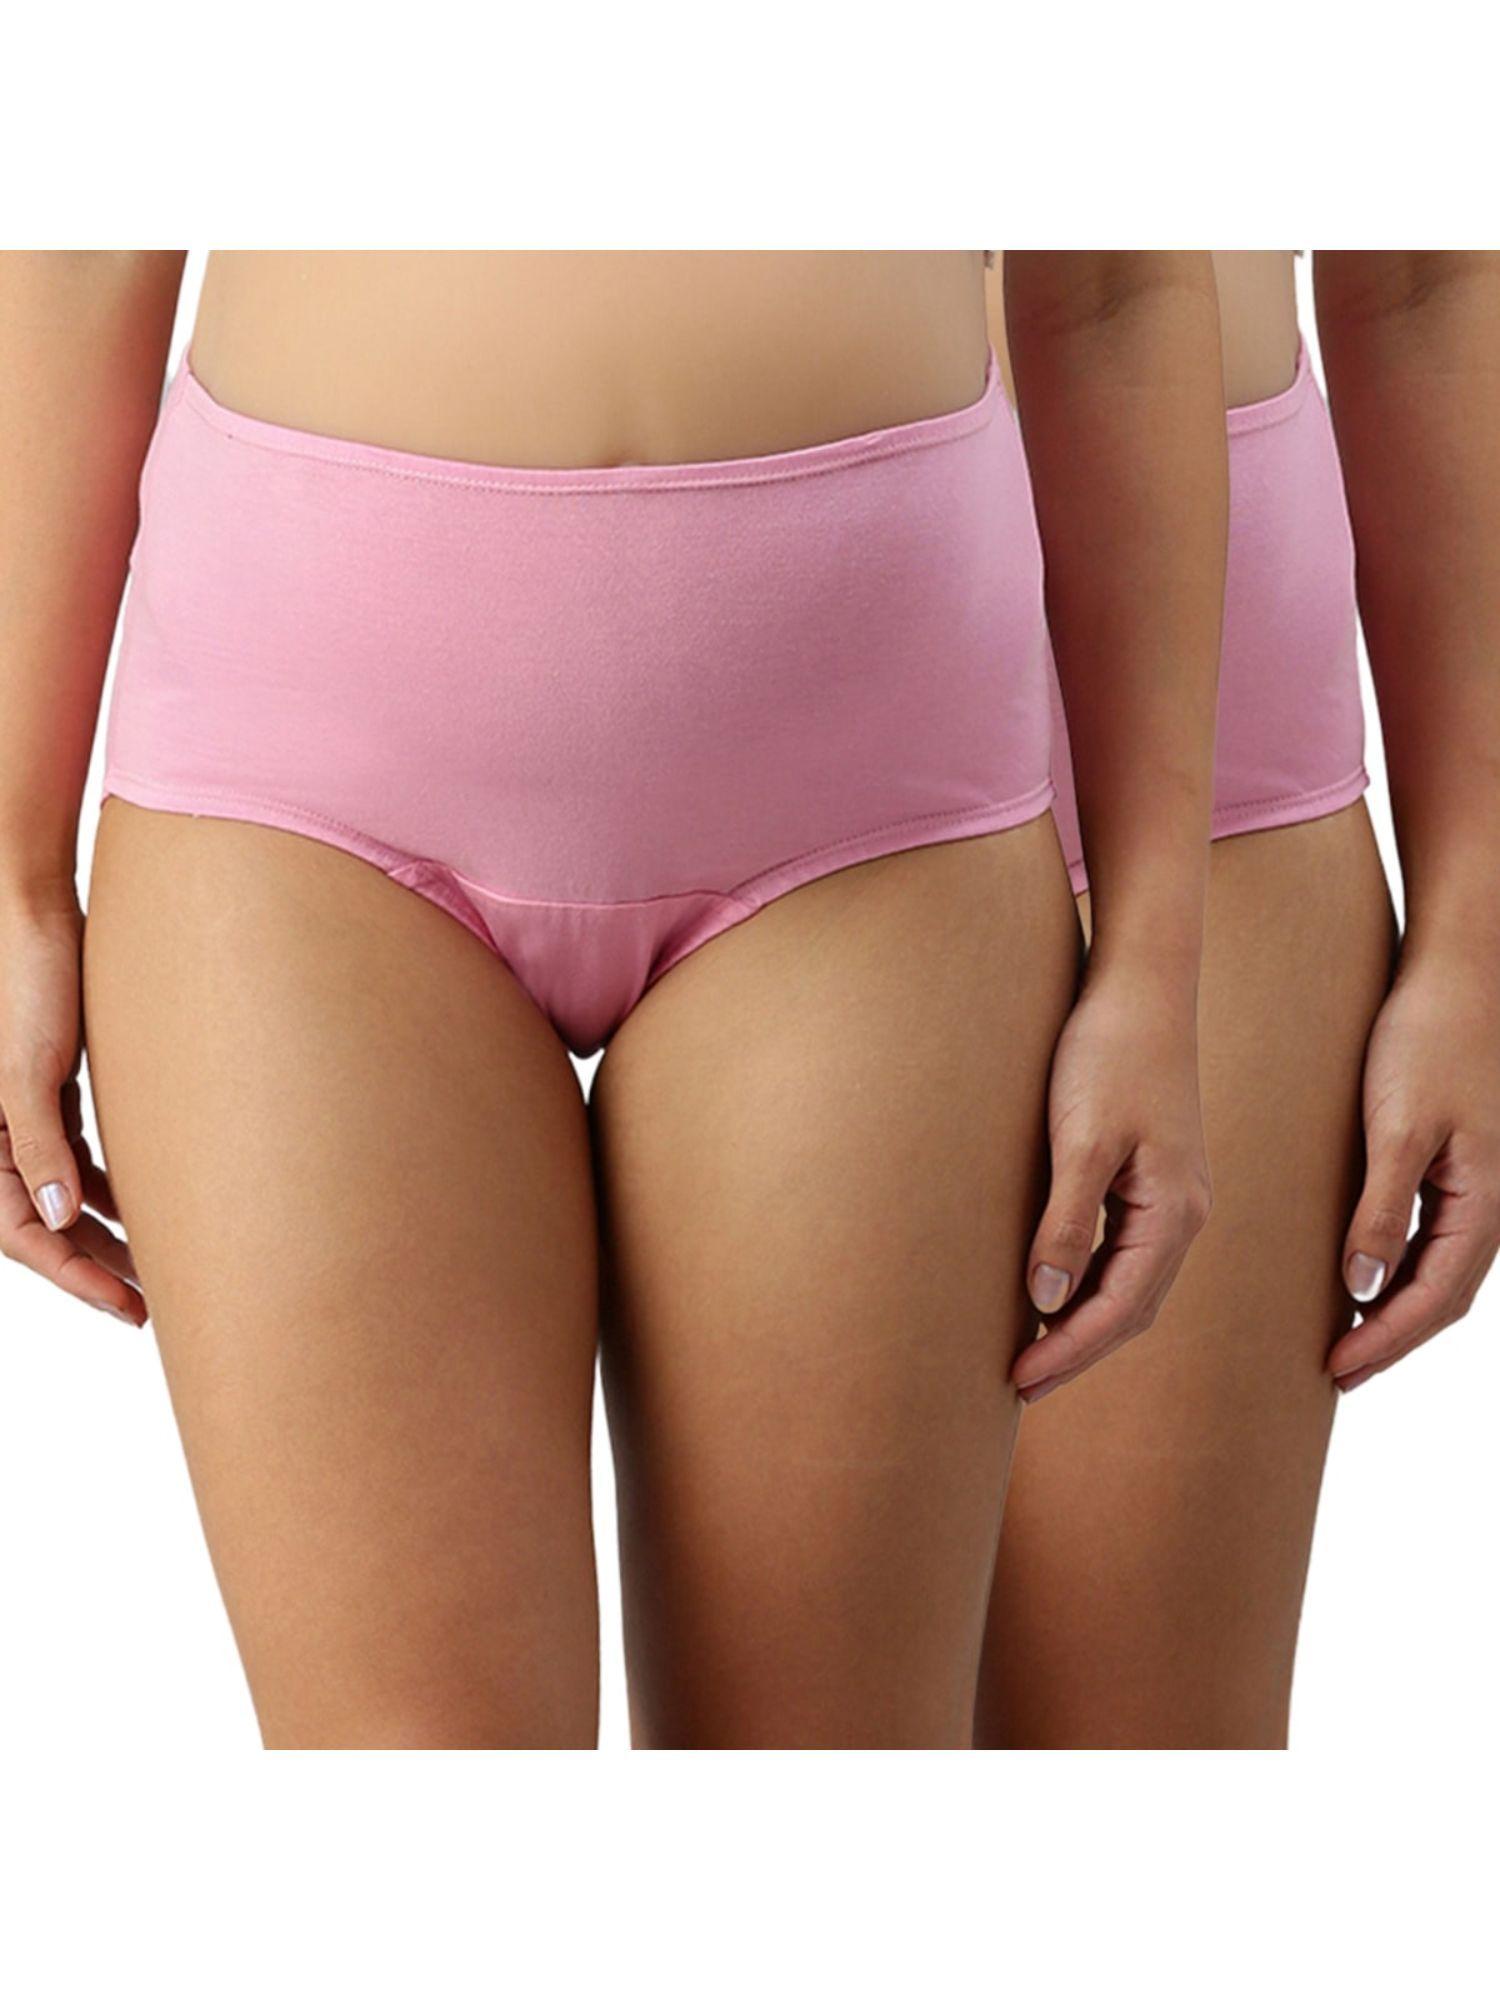 pack of 2 maternity hygiene panties - pink